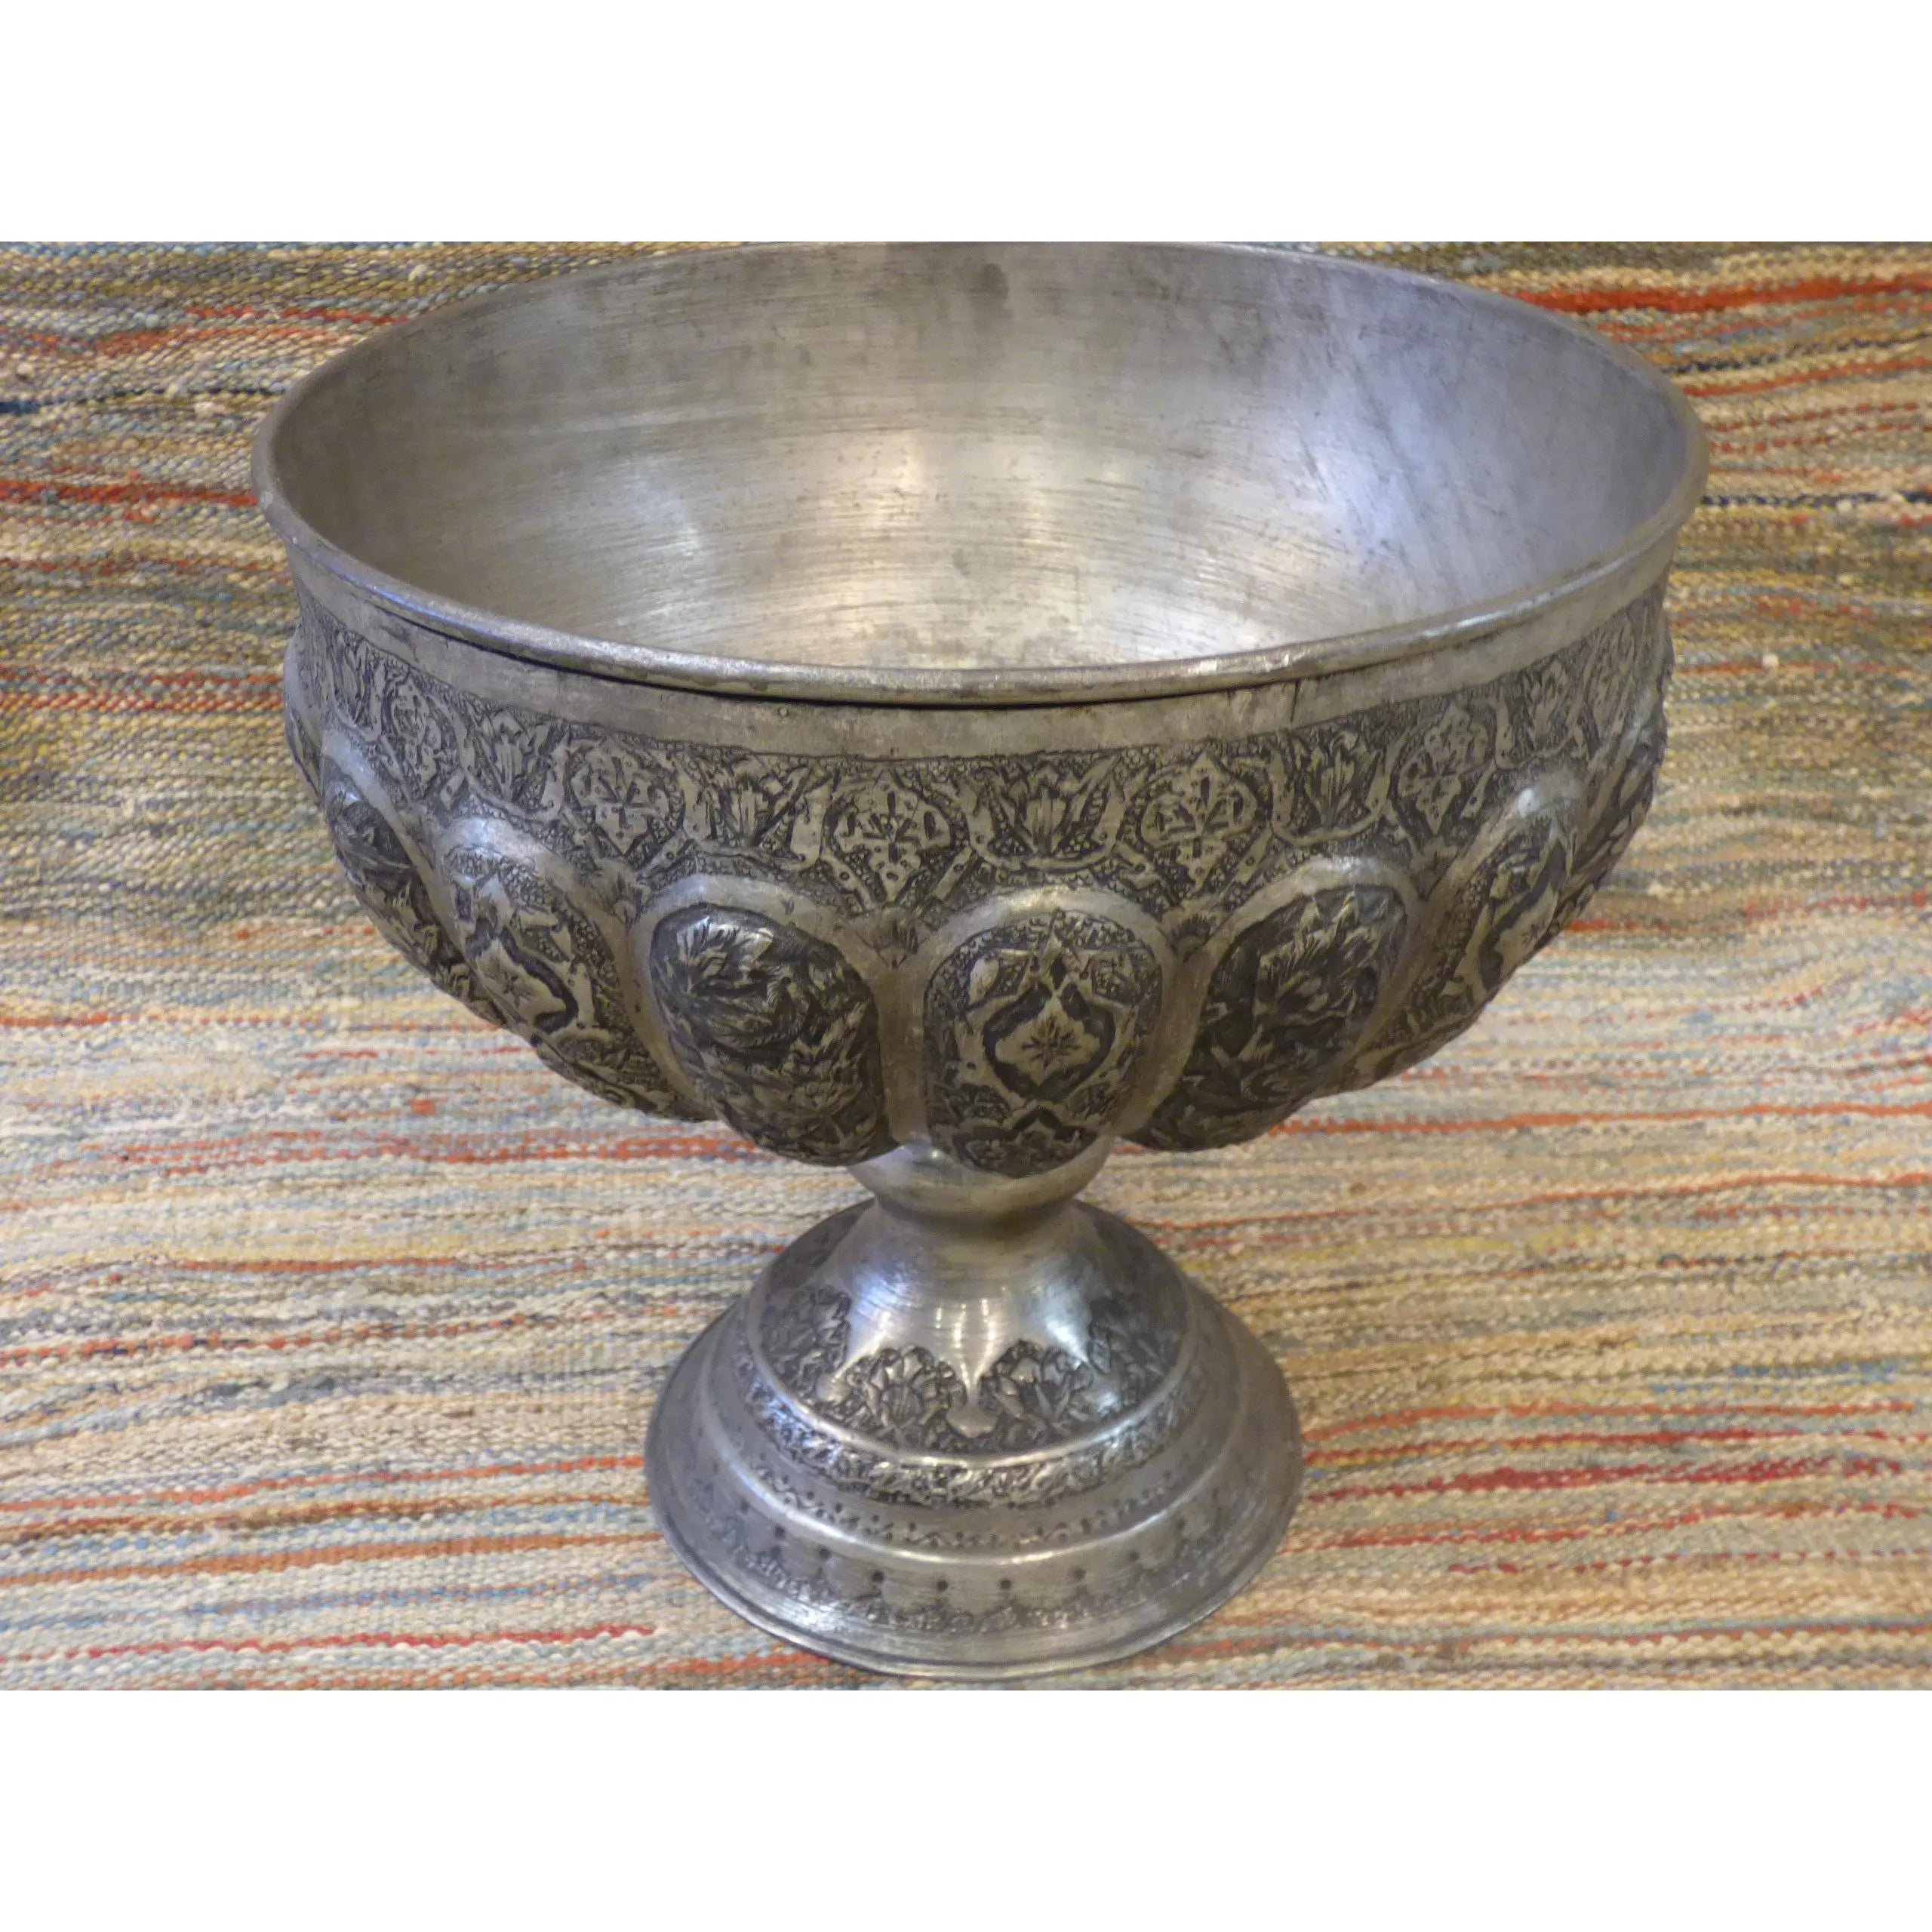 Authentic Art Antique Persian Engraved Brass Vase Ghalamzani 18" X 15" Abcca0110